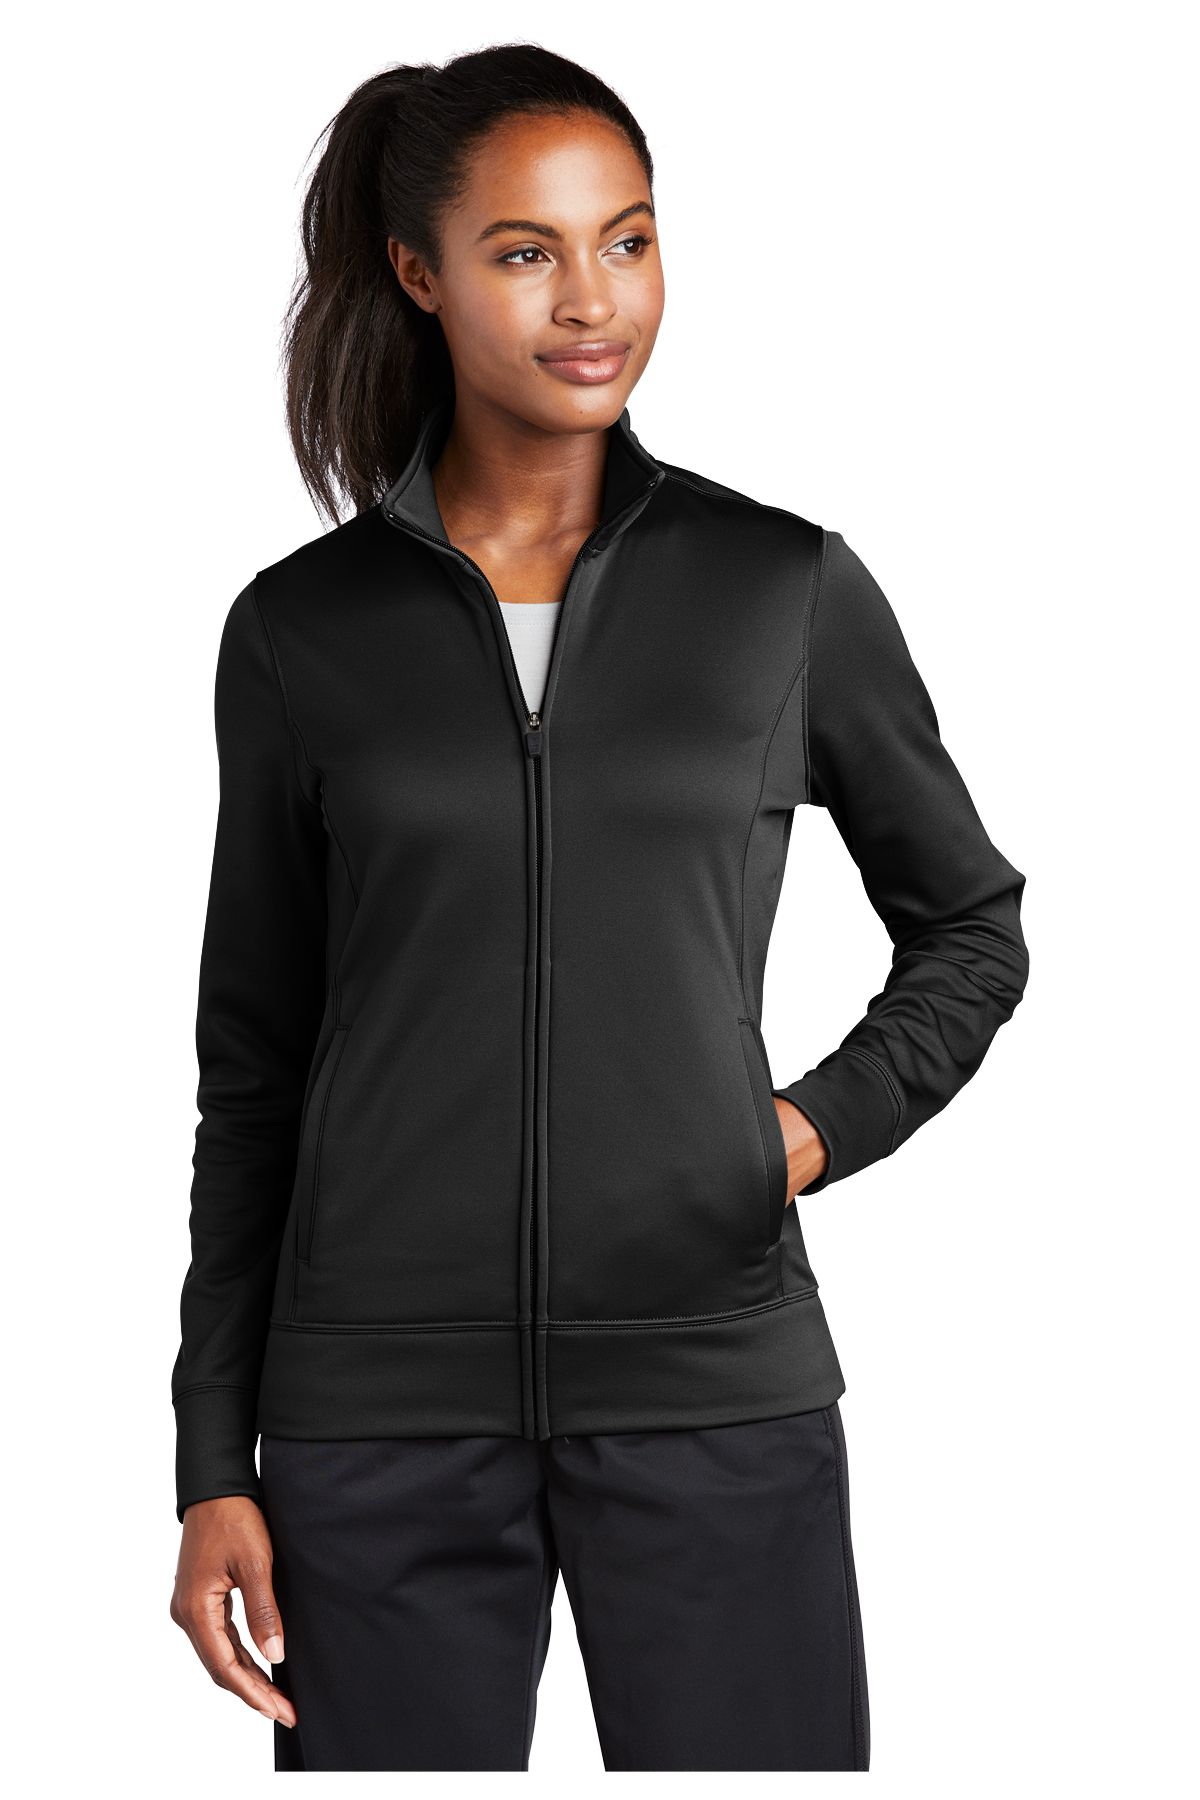 Jacket Sport-Tek Full-Zip Ladies | Product Fleece Sport-Wick Sport-Tek |